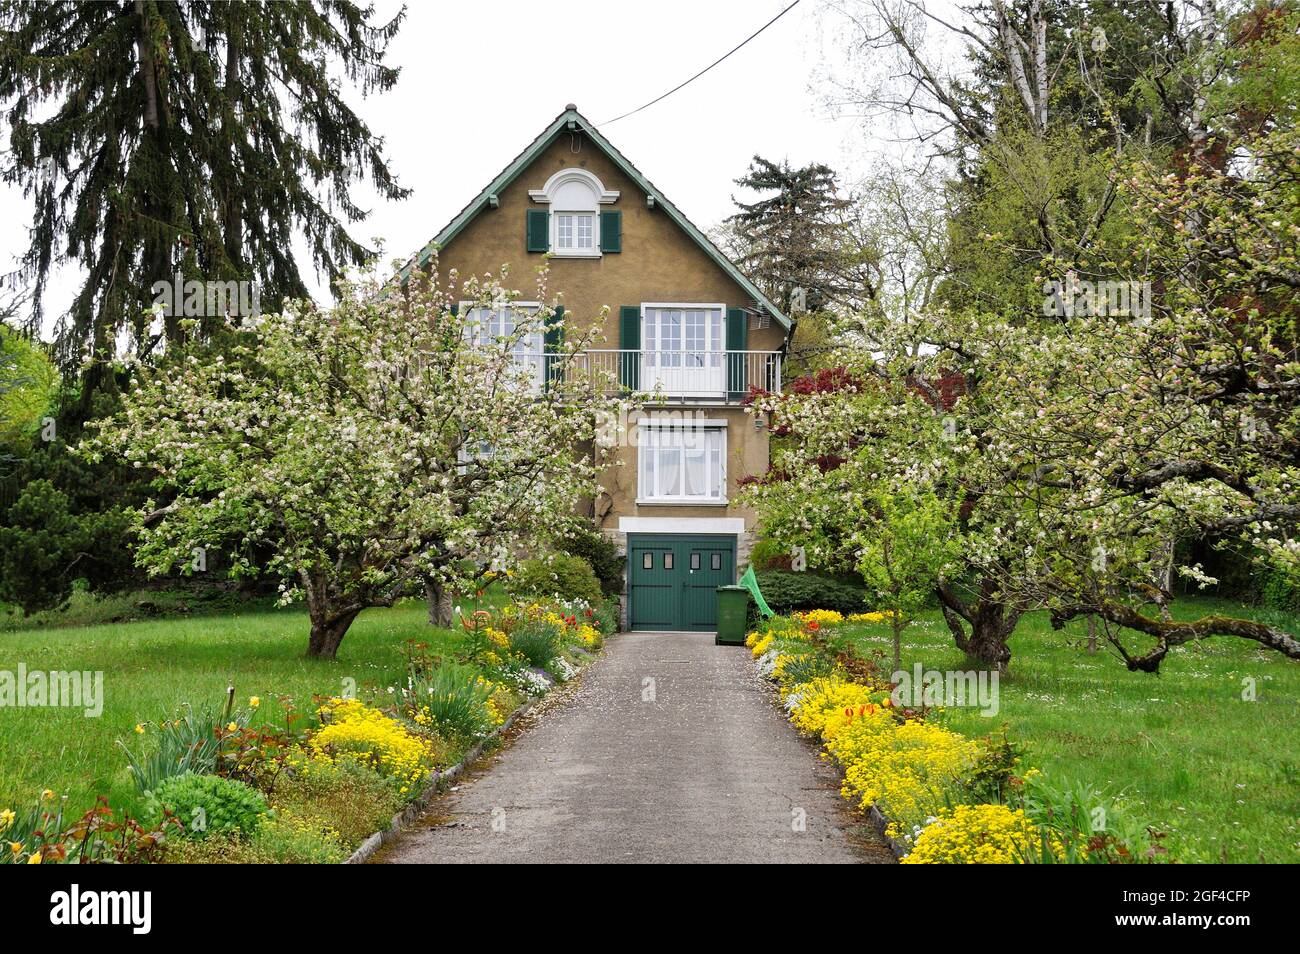 Traditional house with garden in spring, Petit Saconnex, Geneva, Romandie Suisse, Switzerland, Europe Stock Photo